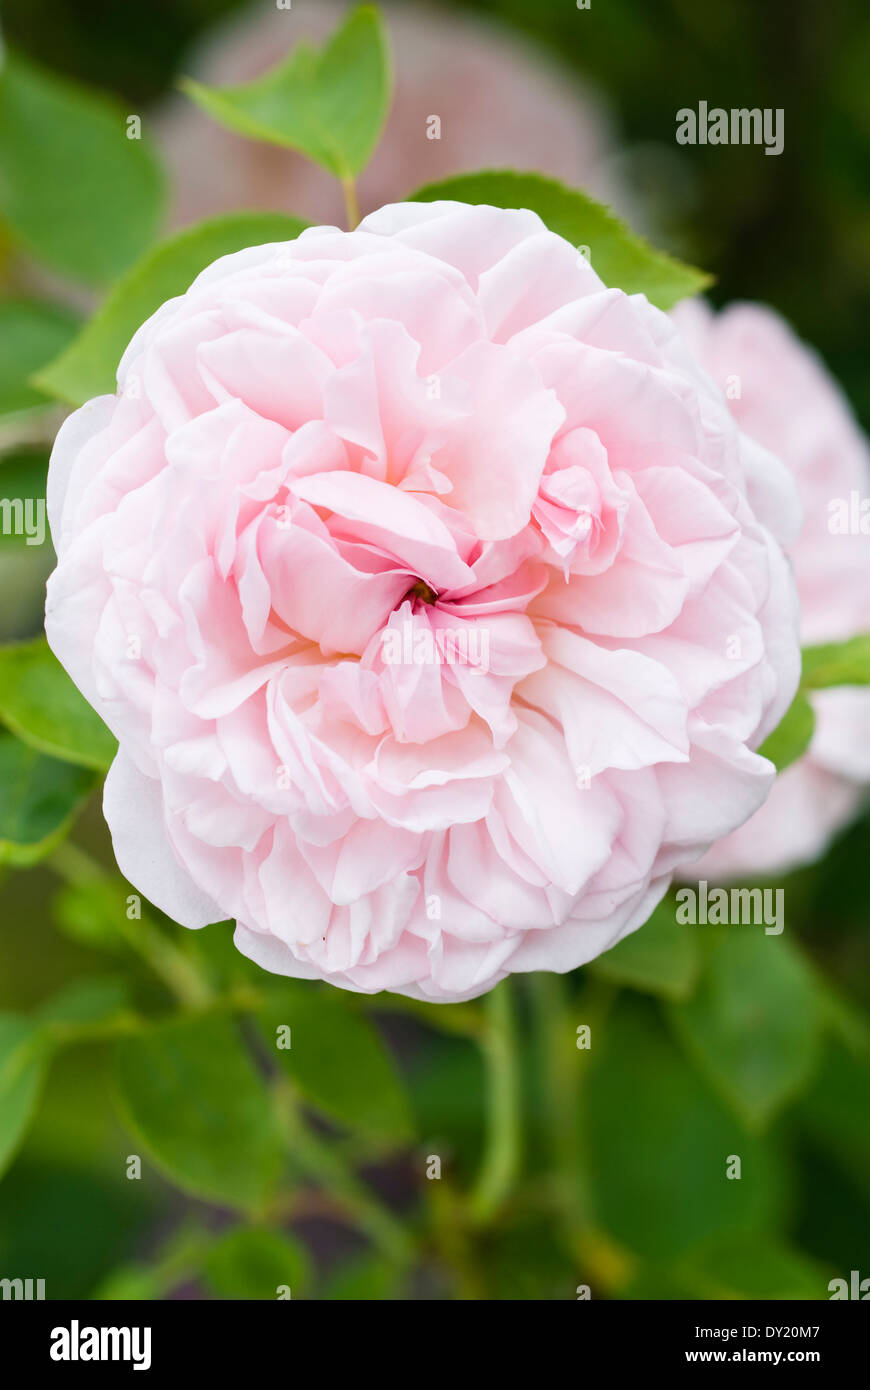 Rosa Eglantyne, Ausmak, Rose. Shrub, June, summer. Pale pink rose. Stock Photo